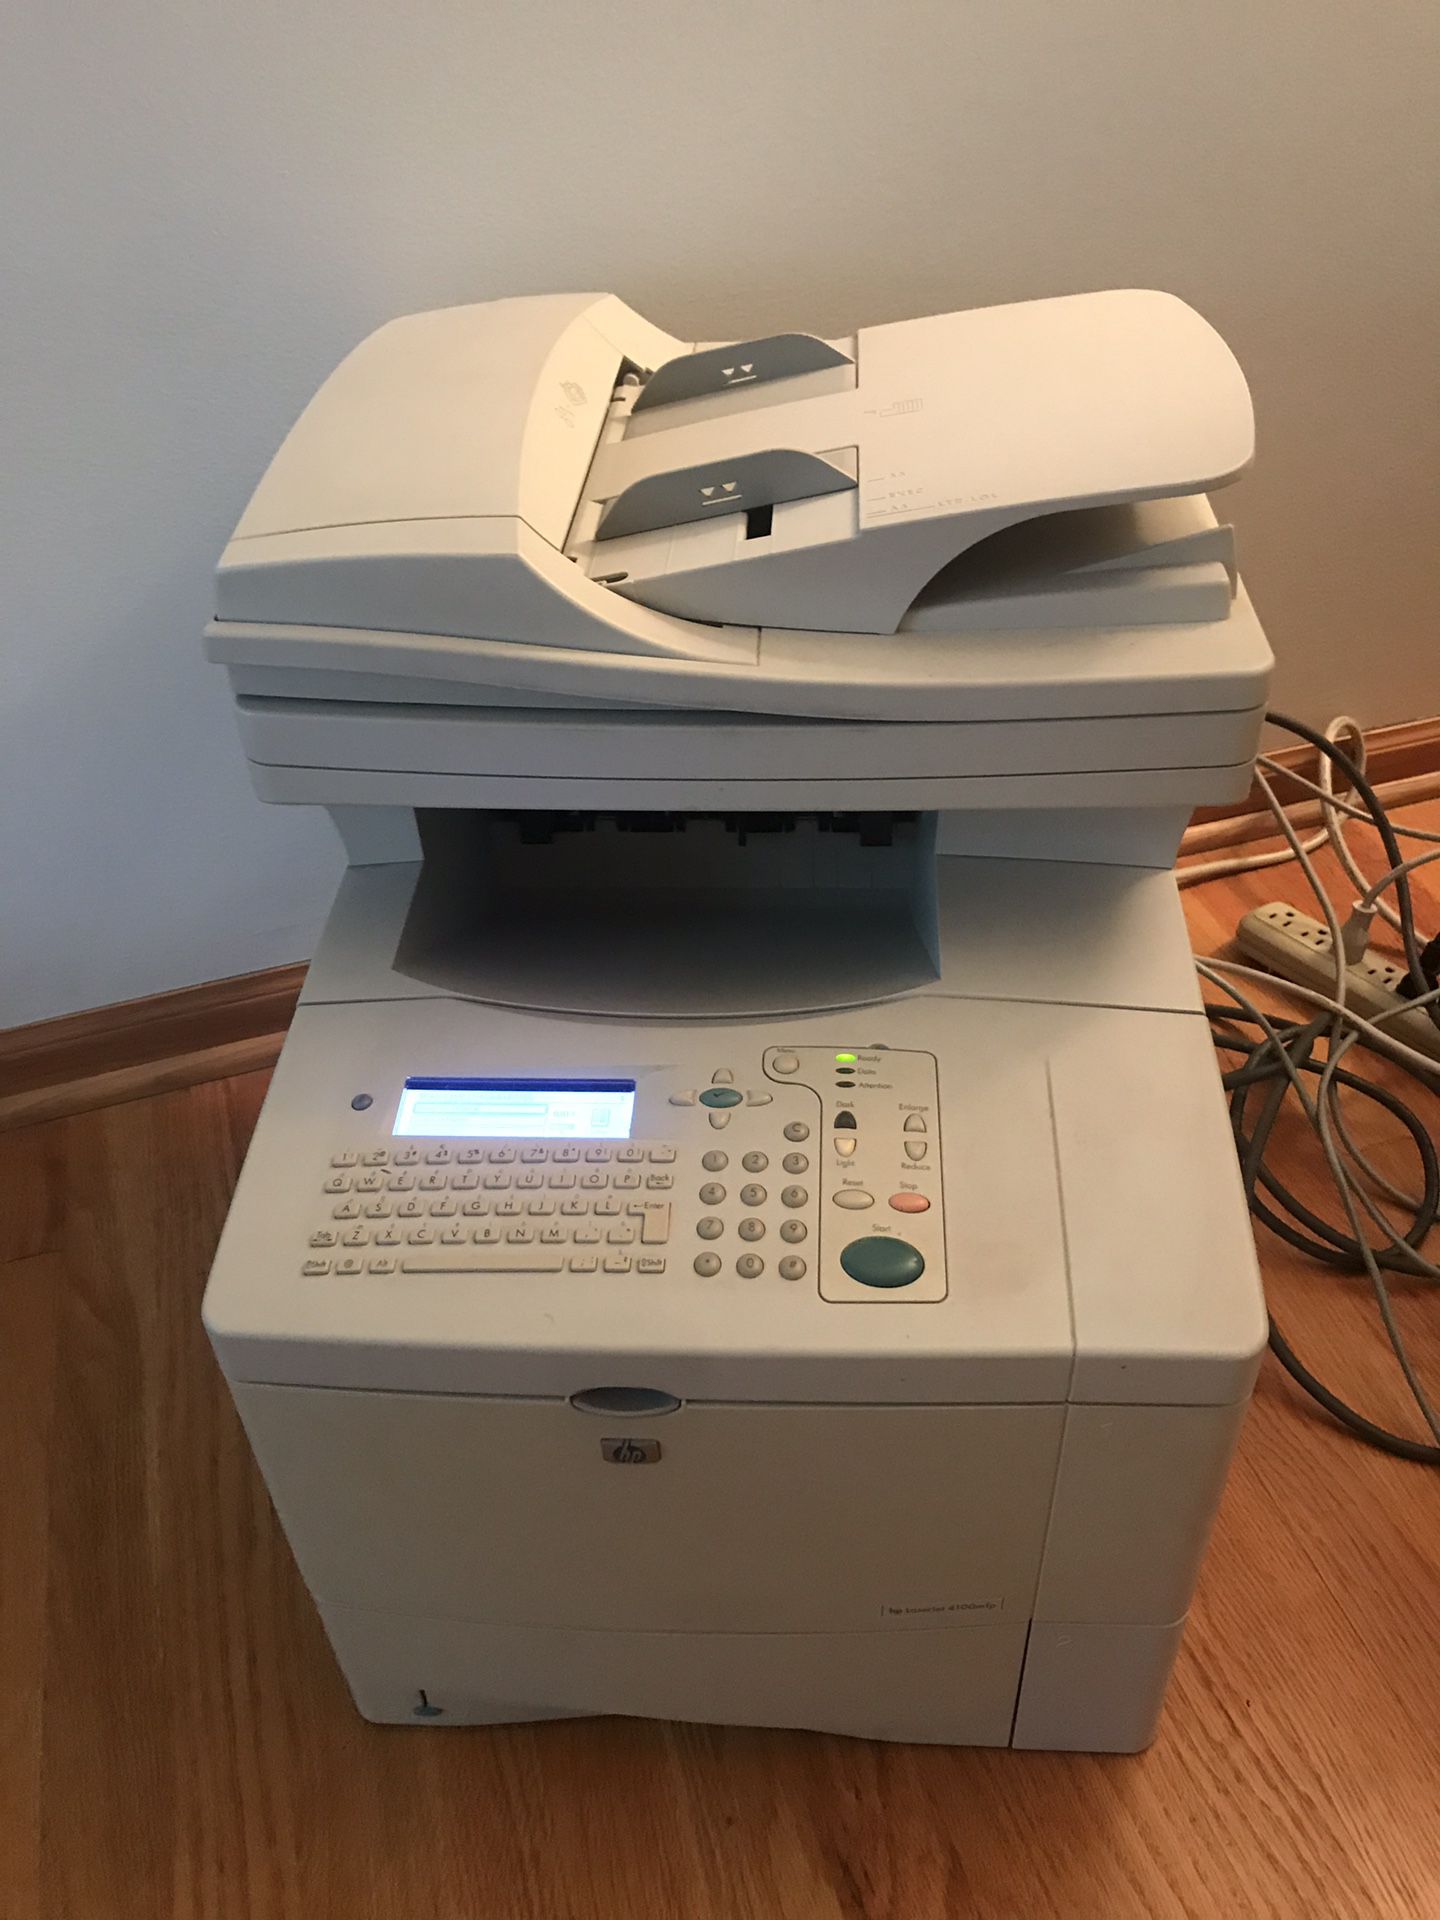 Hp 4100 printer